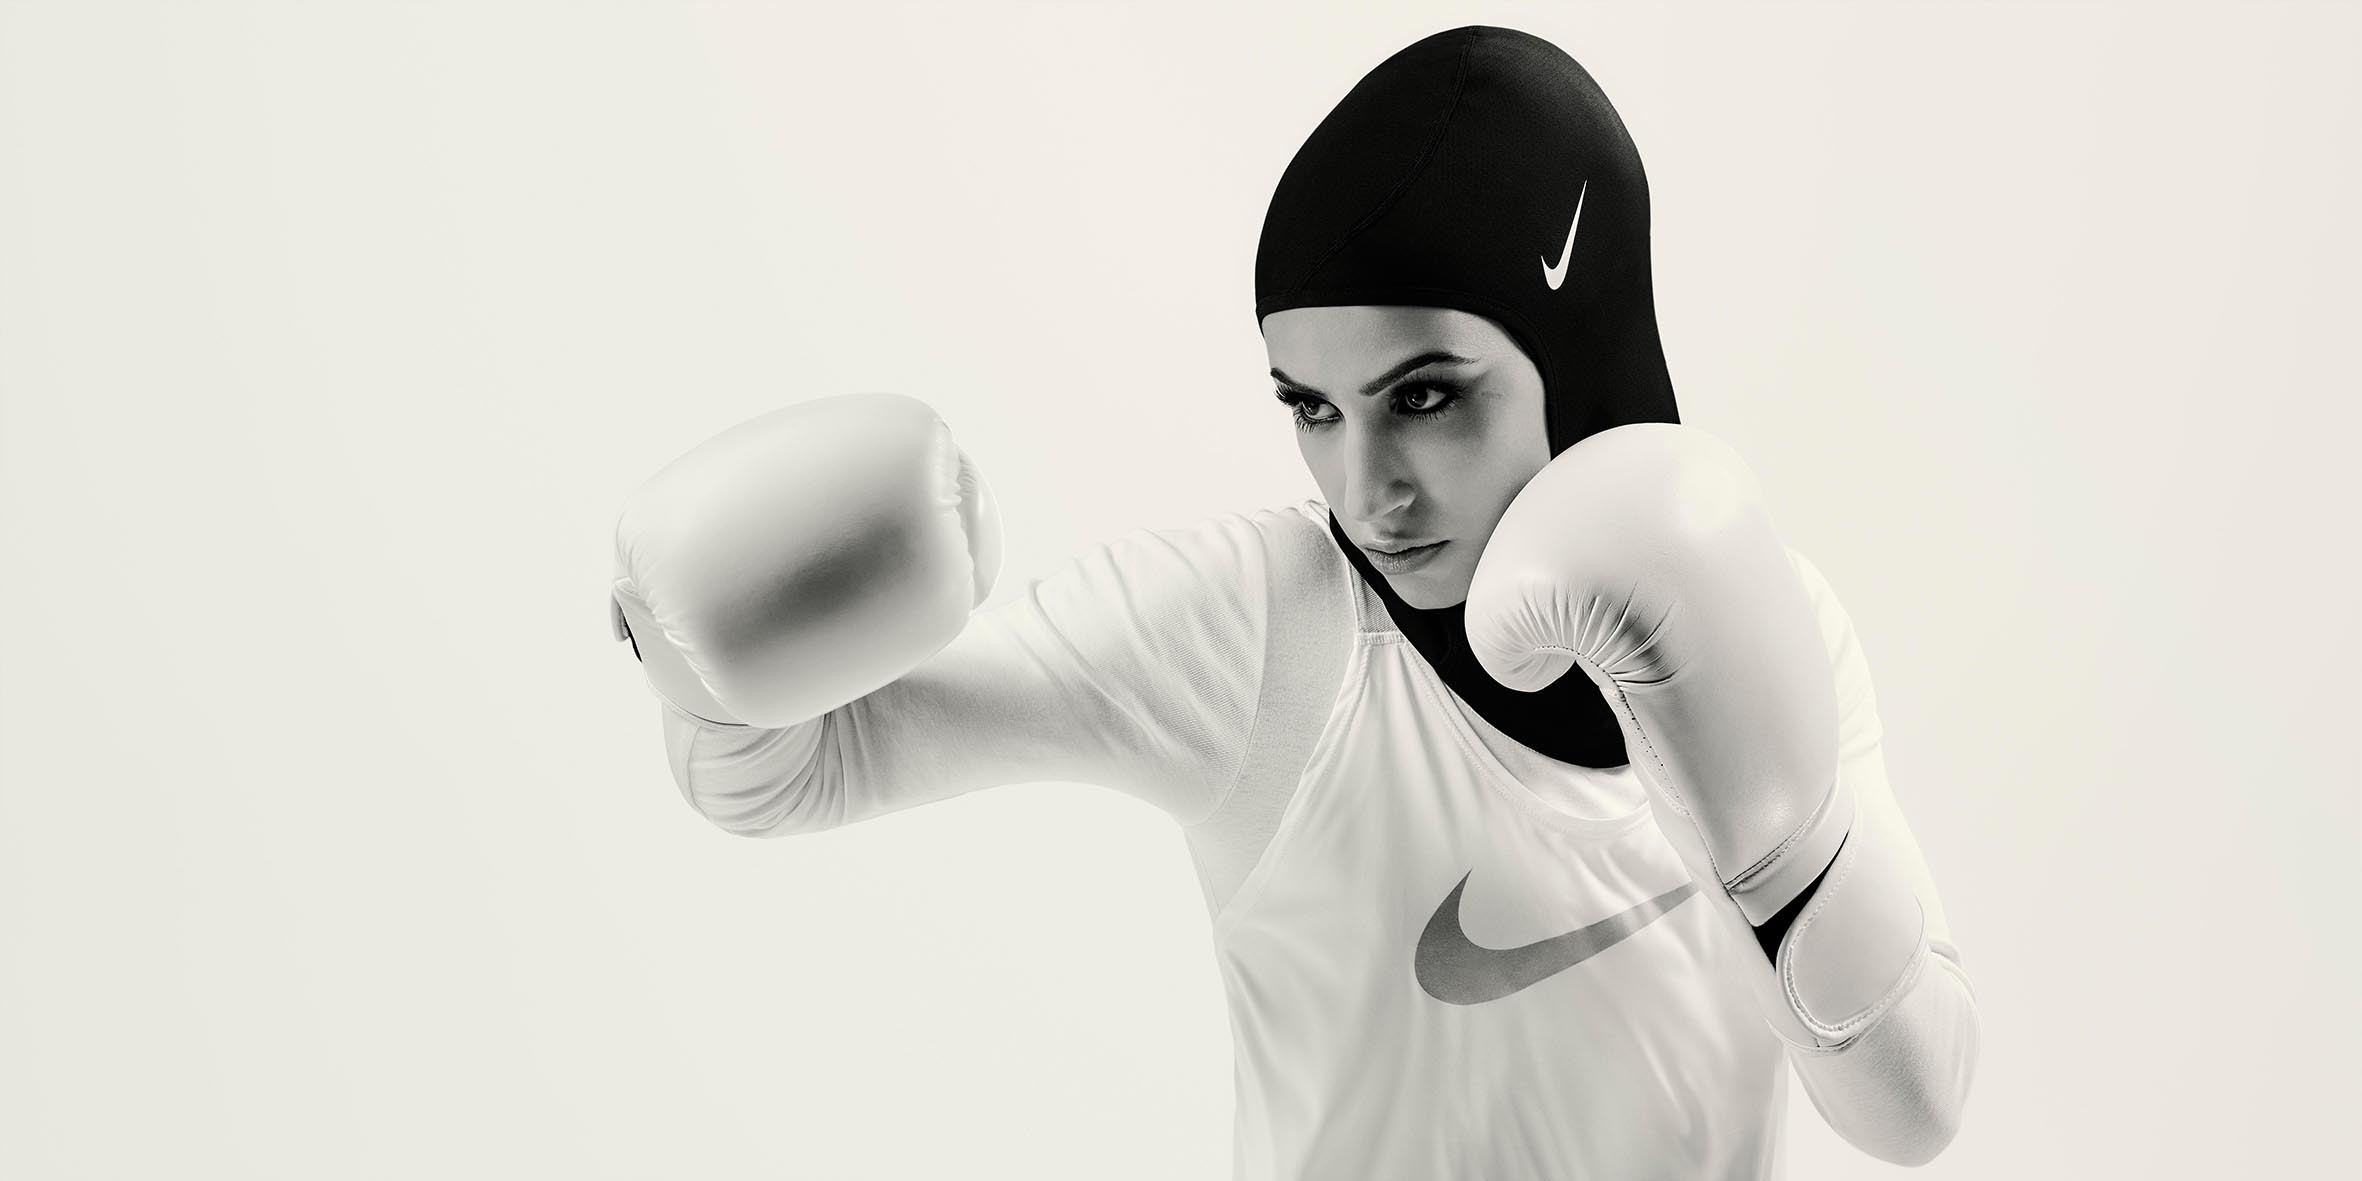 Nike Pro Hijab Zeina Nassar, boxer/Shot by Rick Guest @ East2017 © Nike, Inc.